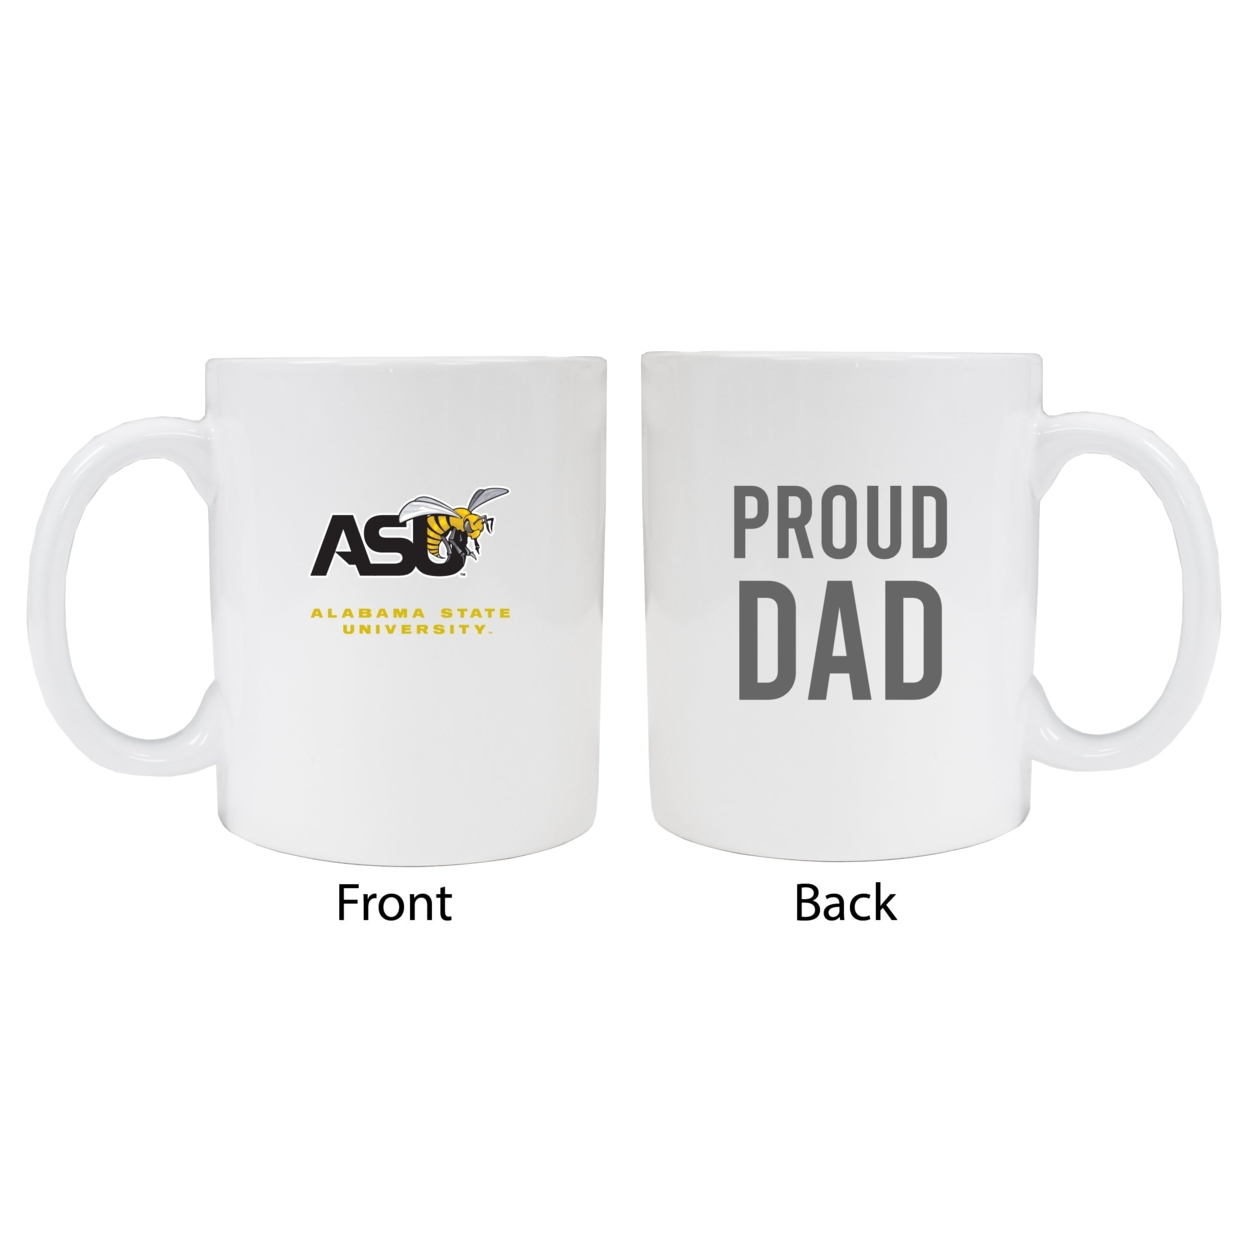 Alabama State University Proud Dad Ceramic Coffee Mug - White (2 Pack)